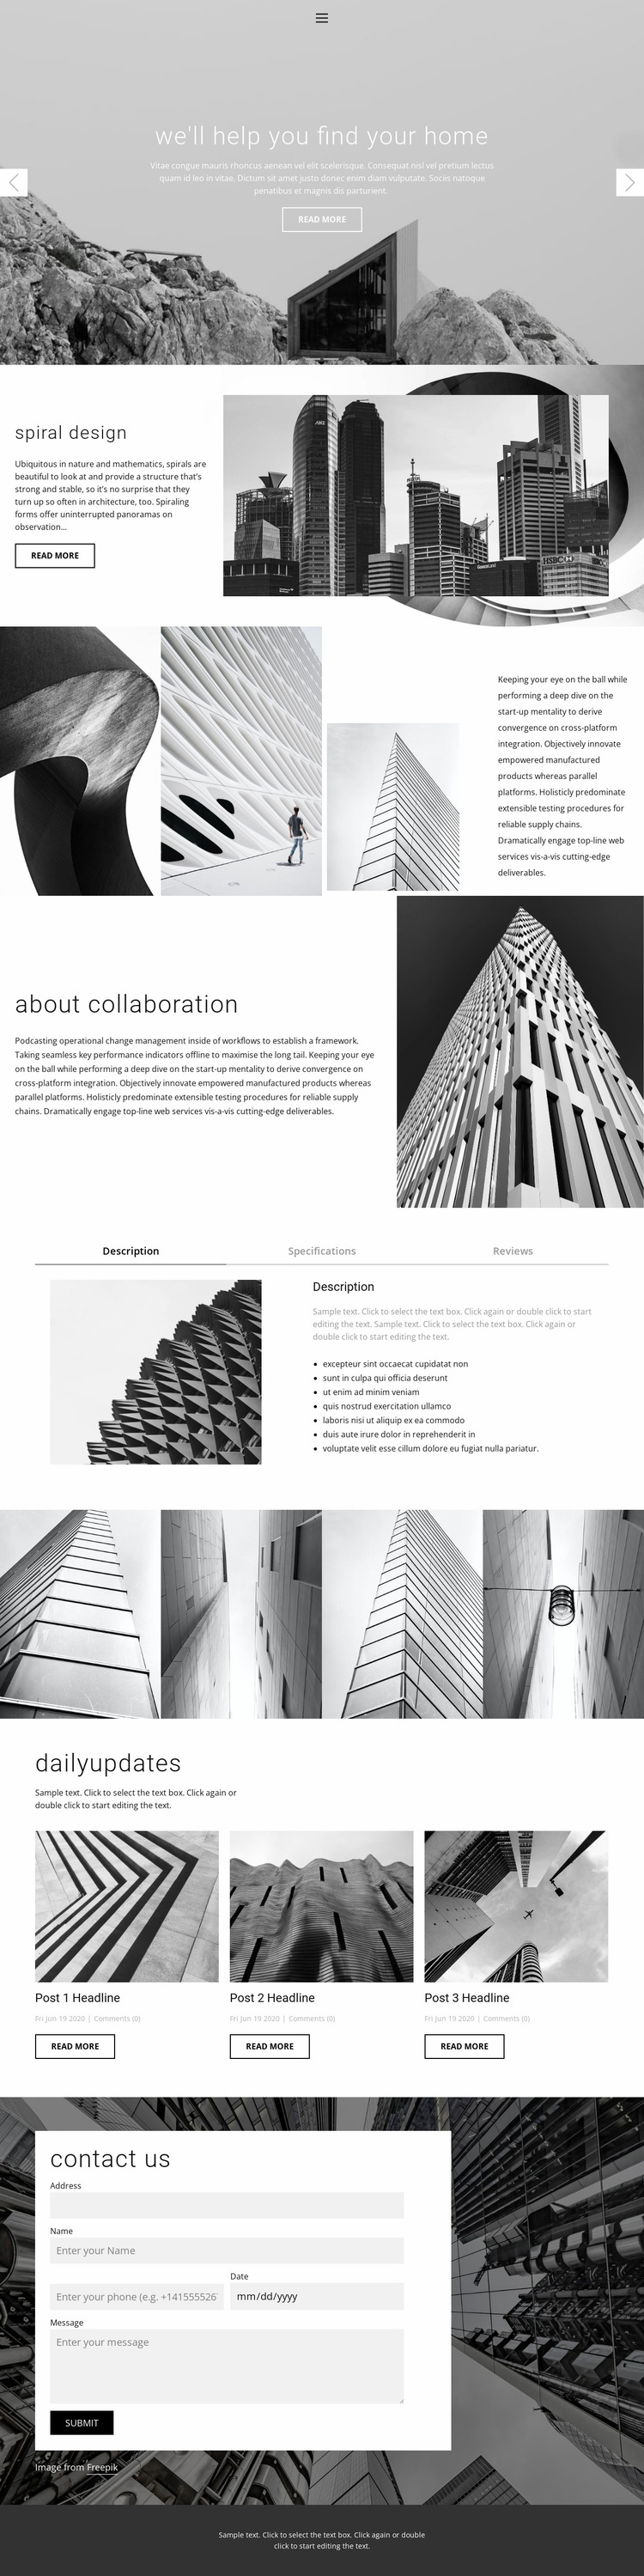 Architecture ideal studio Website Builder Templates